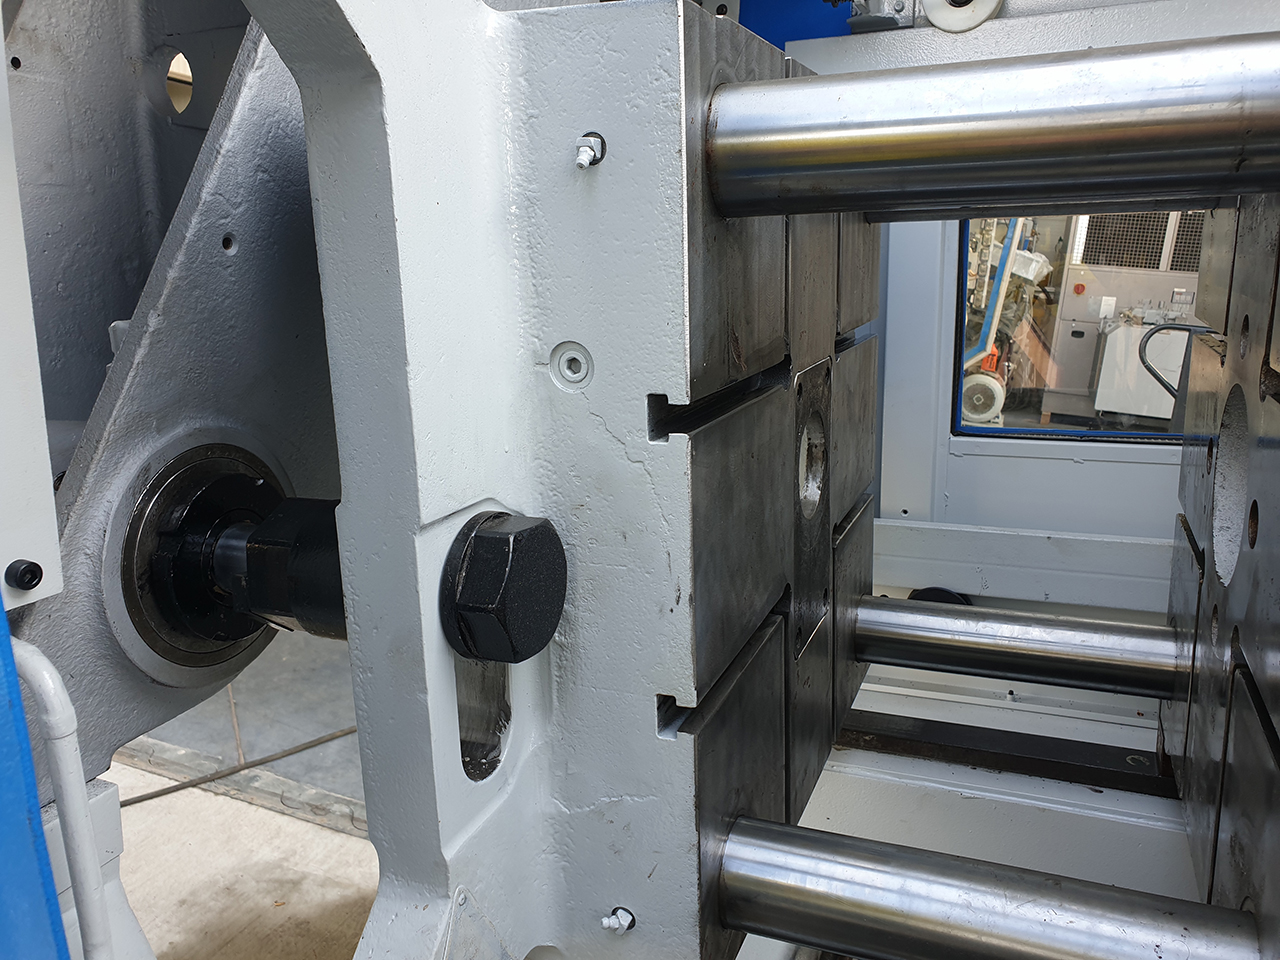 Reacondicionamiento de la máquina de fundición a presión de cámara caliente Frech DAW 80